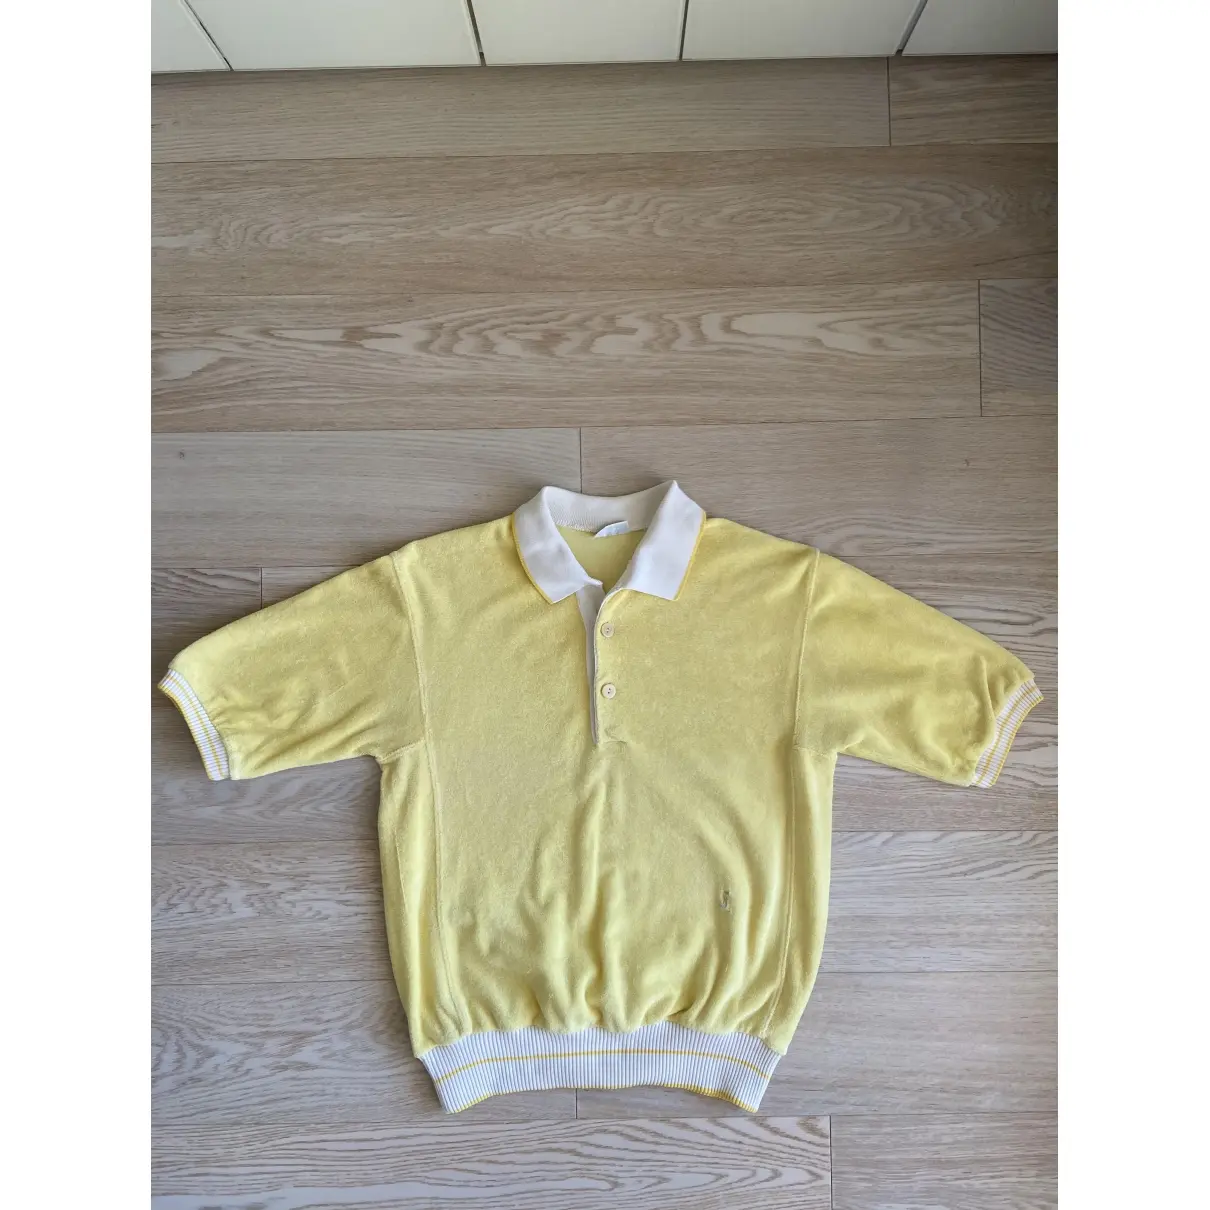 Buy Yves Saint Laurent Yellow Cotton Top online - Vintage